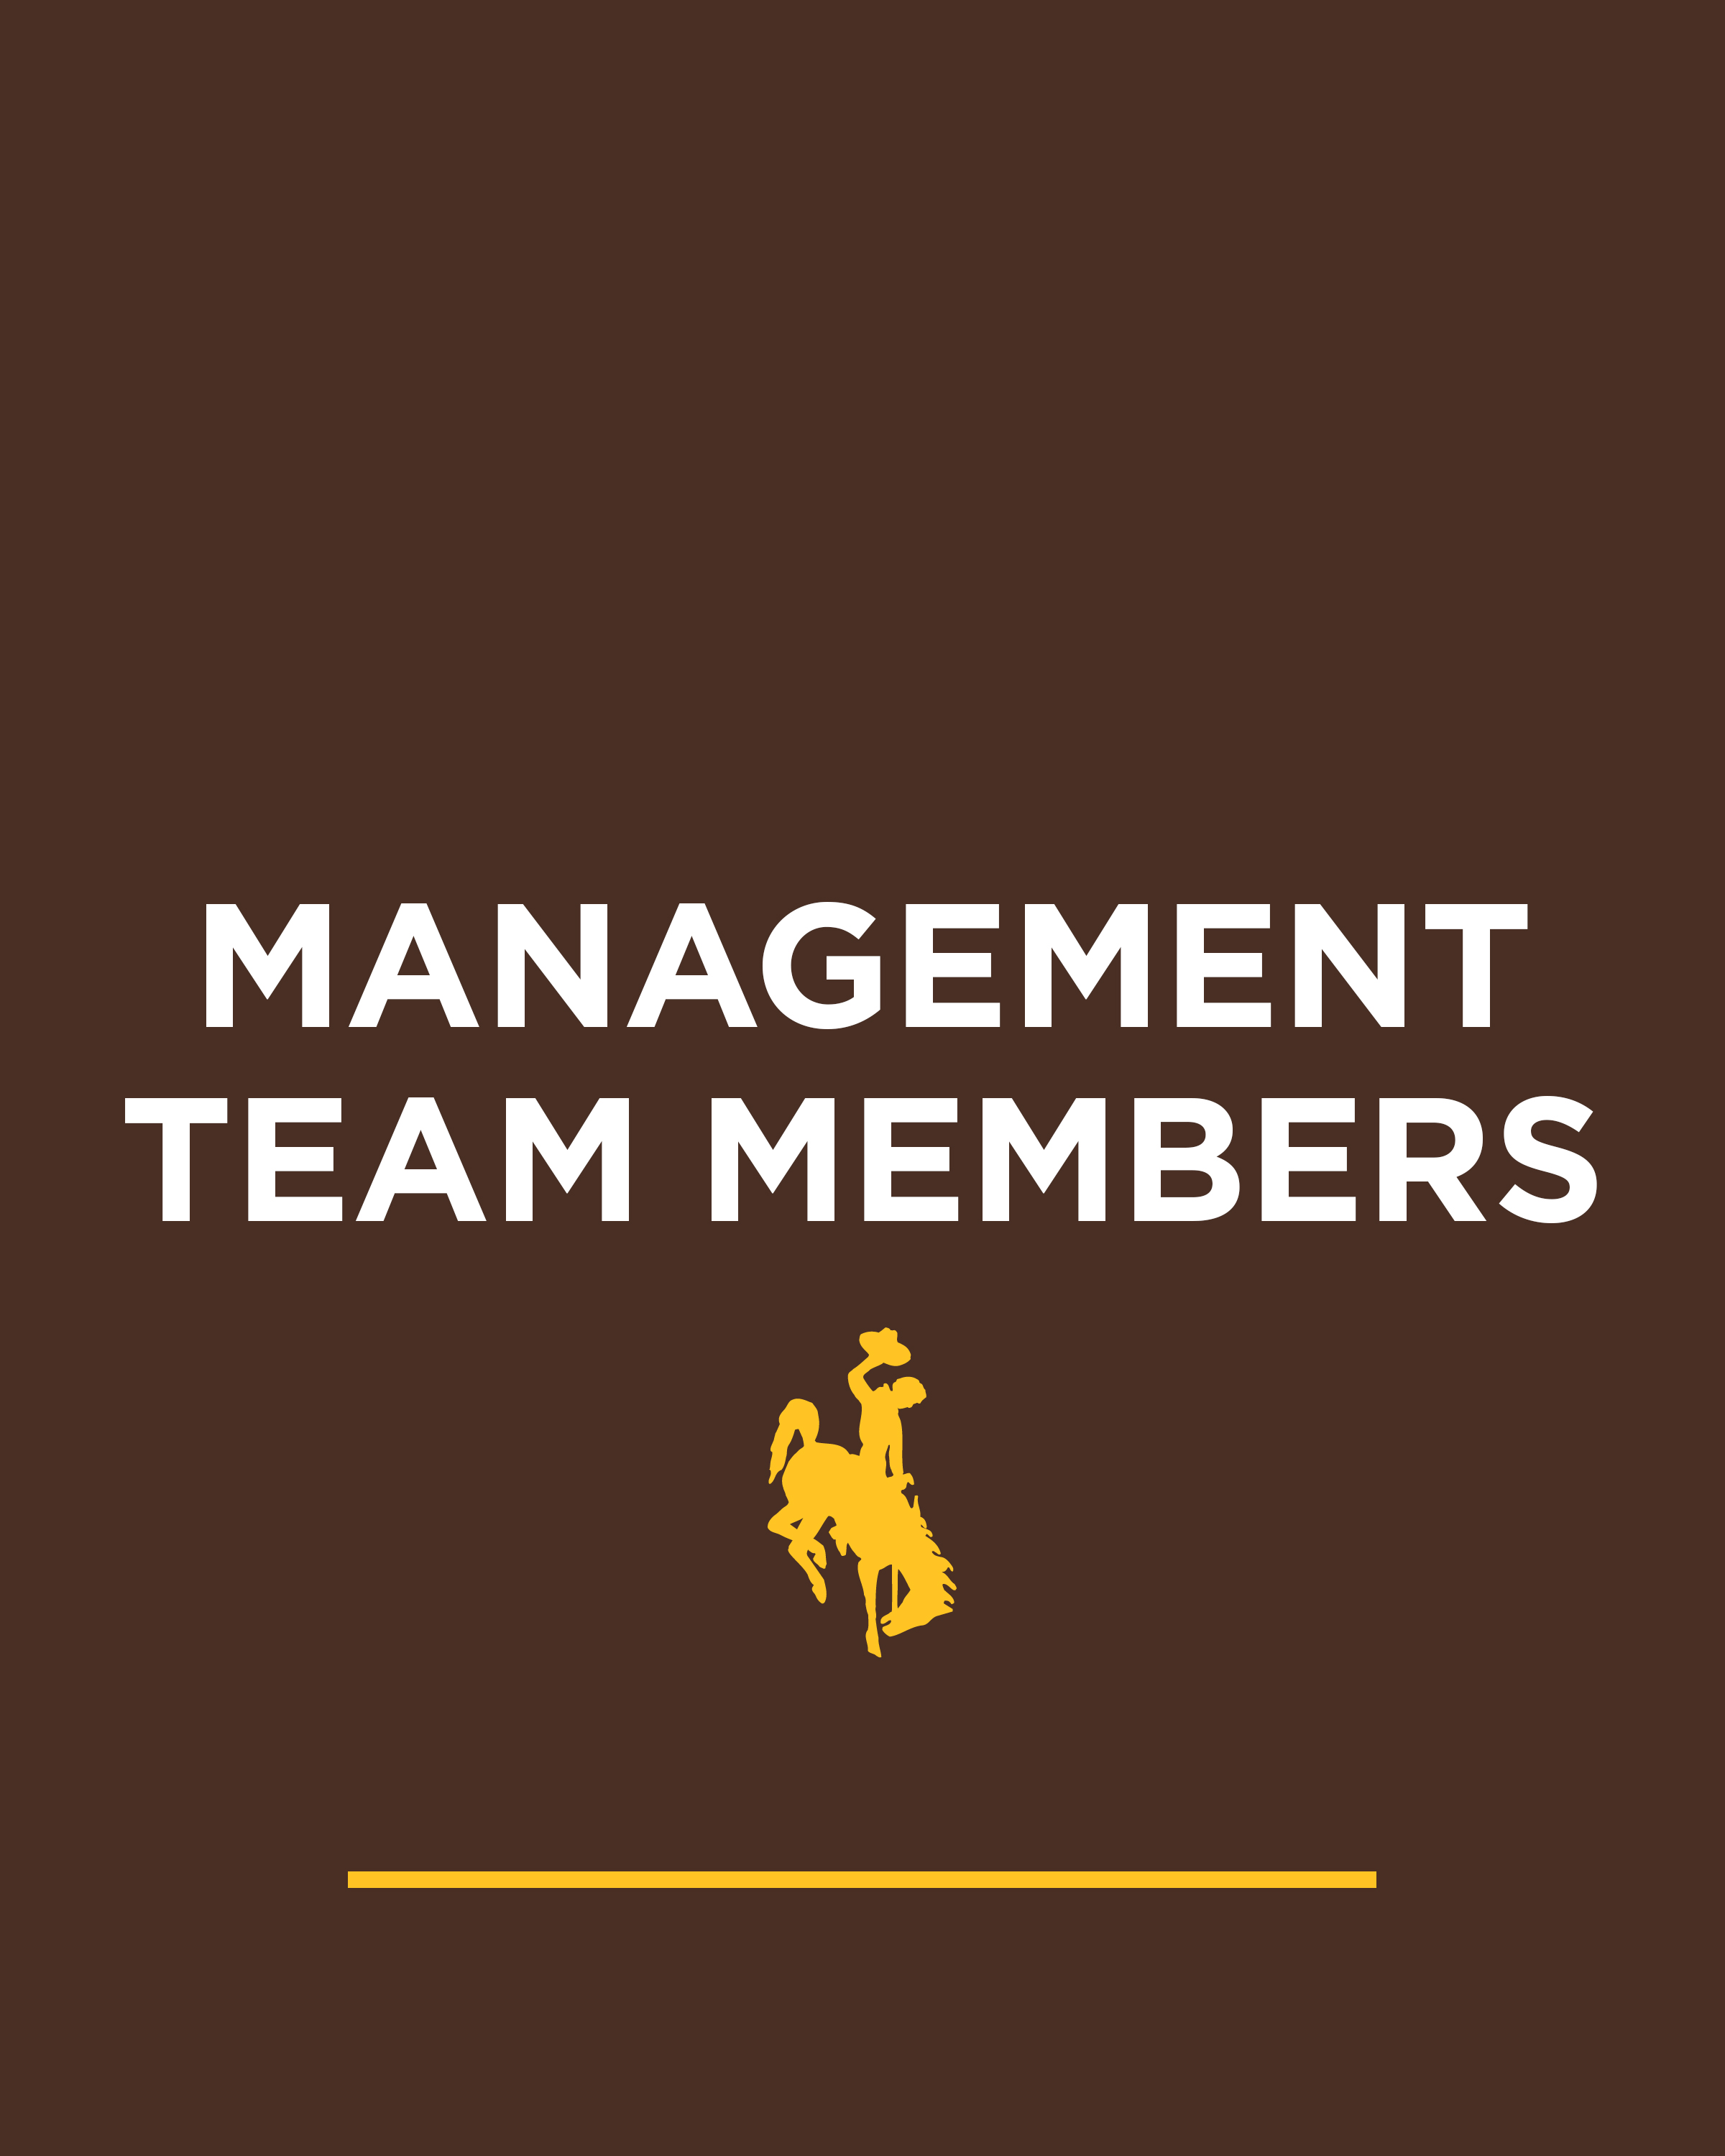 Management Staff